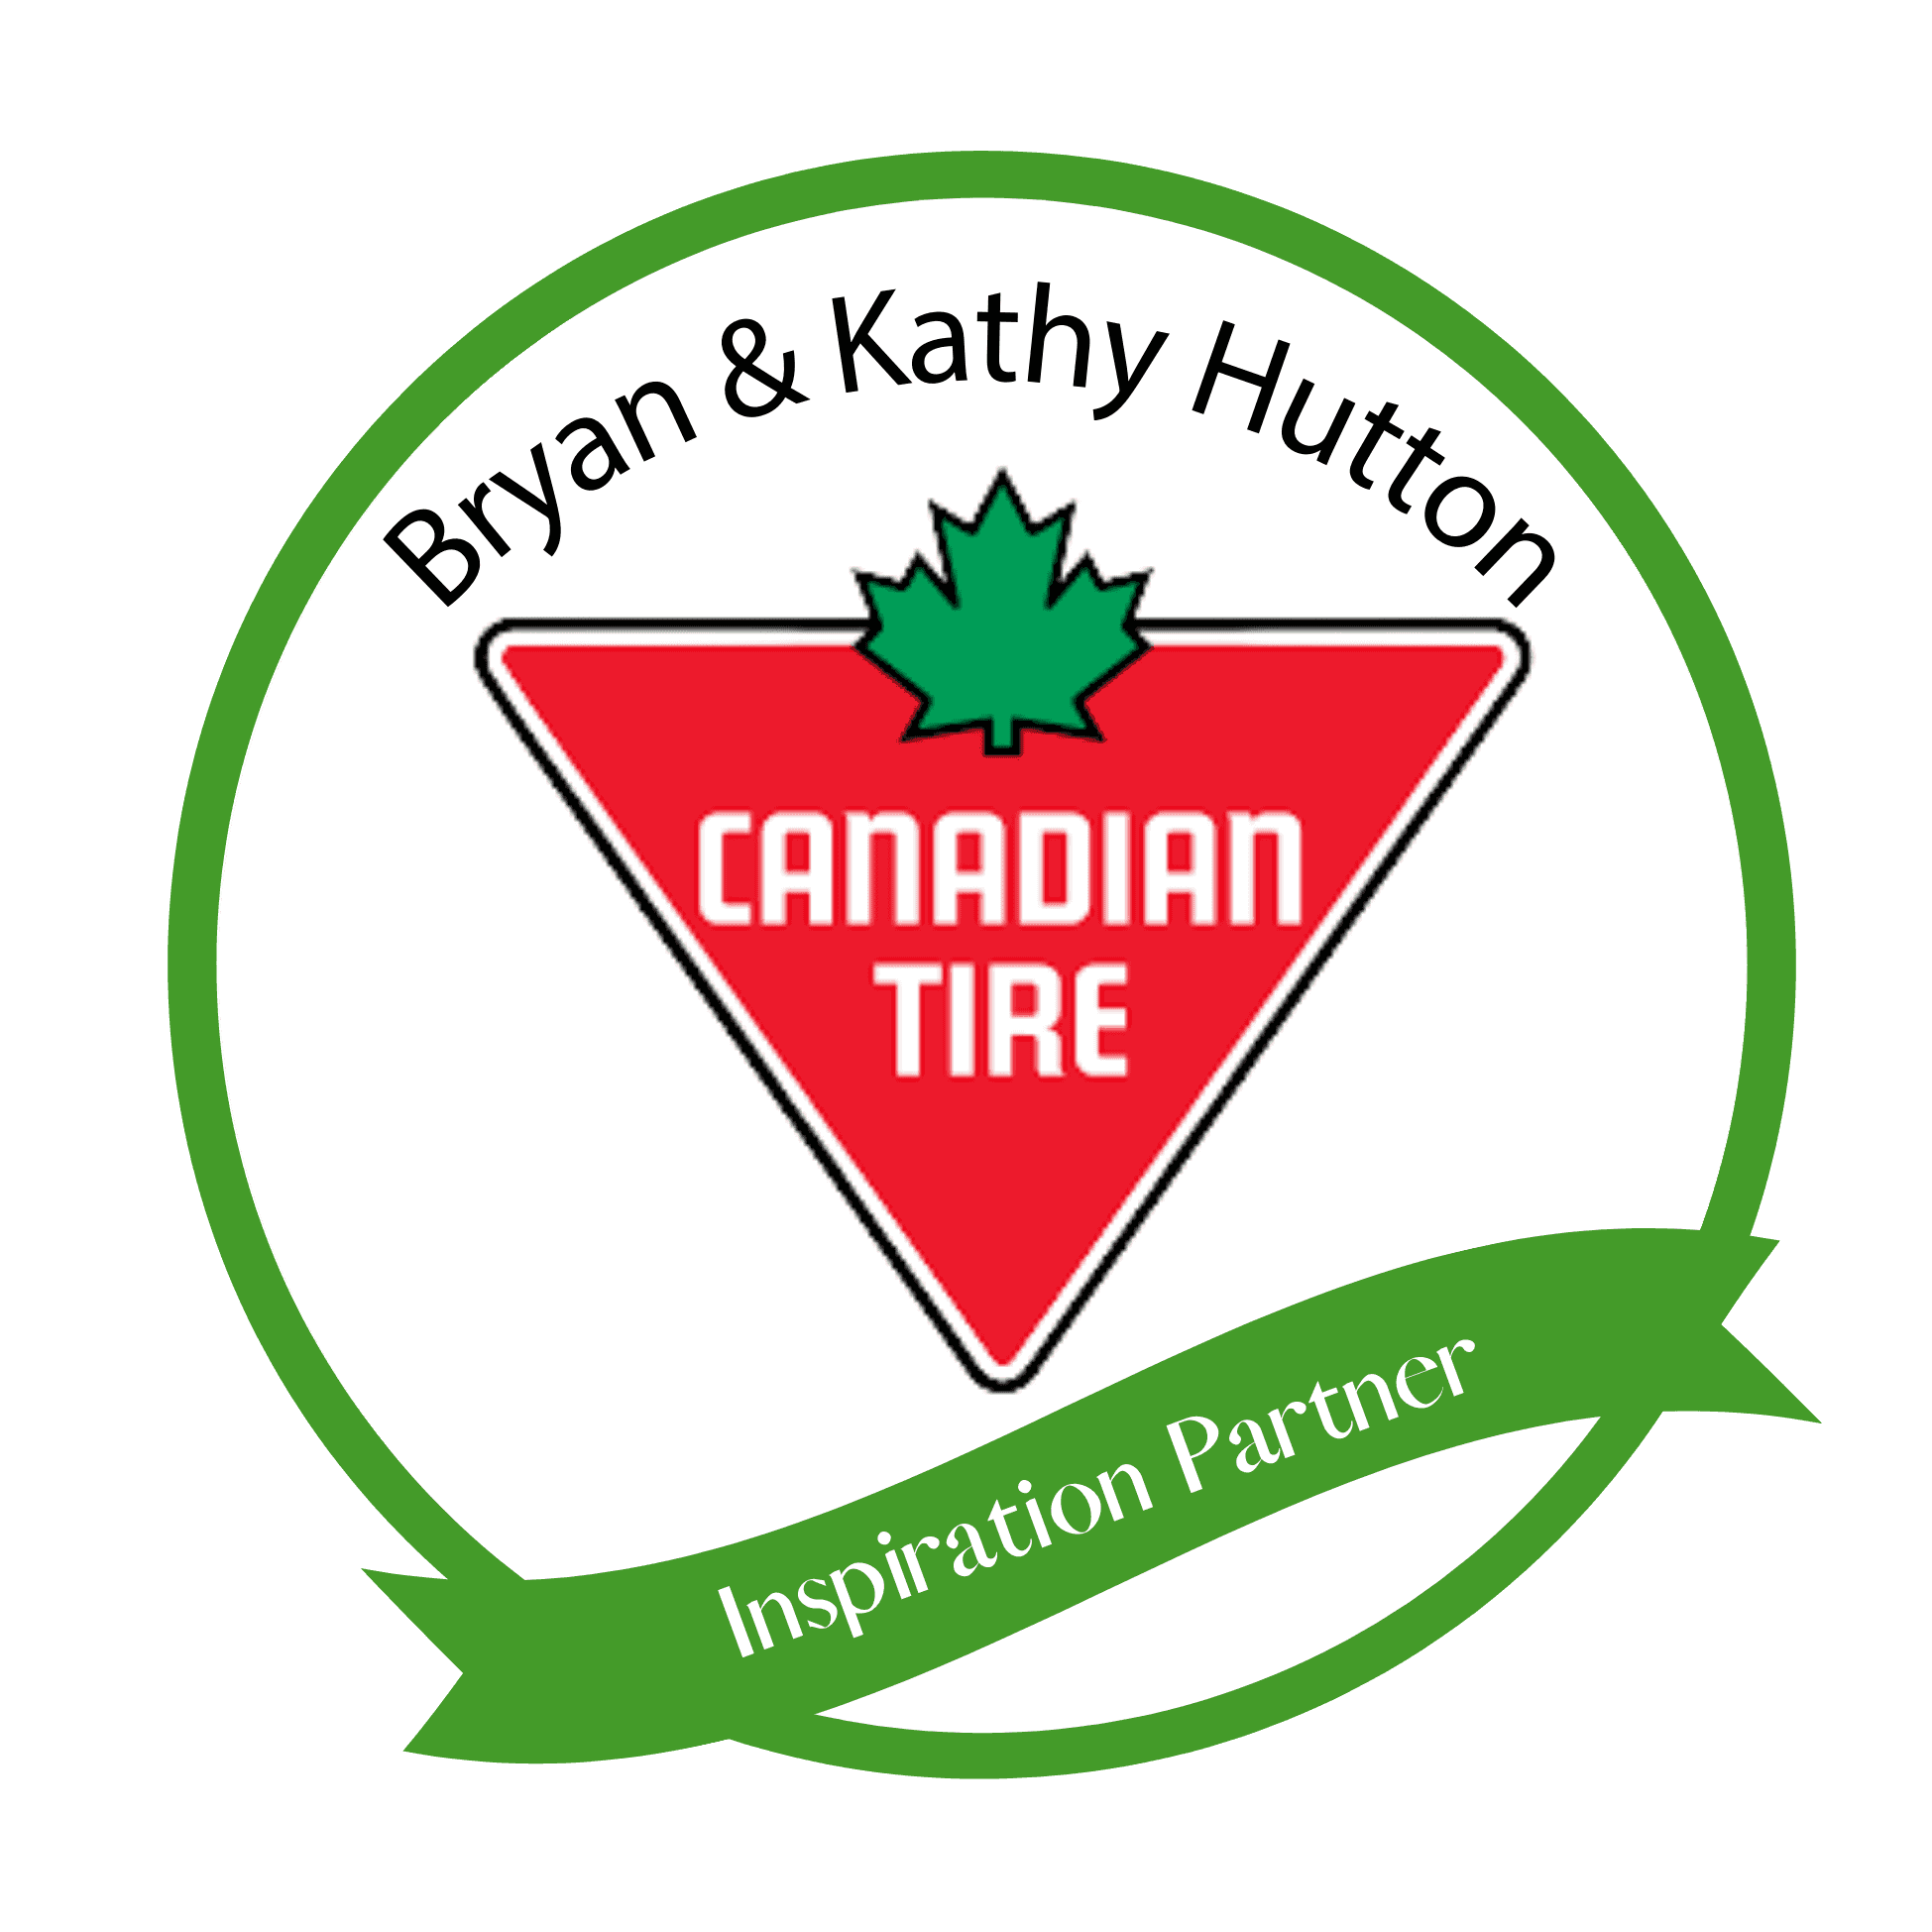 <p>Canadian Tire</p><p>Bryan &amp; Kathy Hutton</p> logo